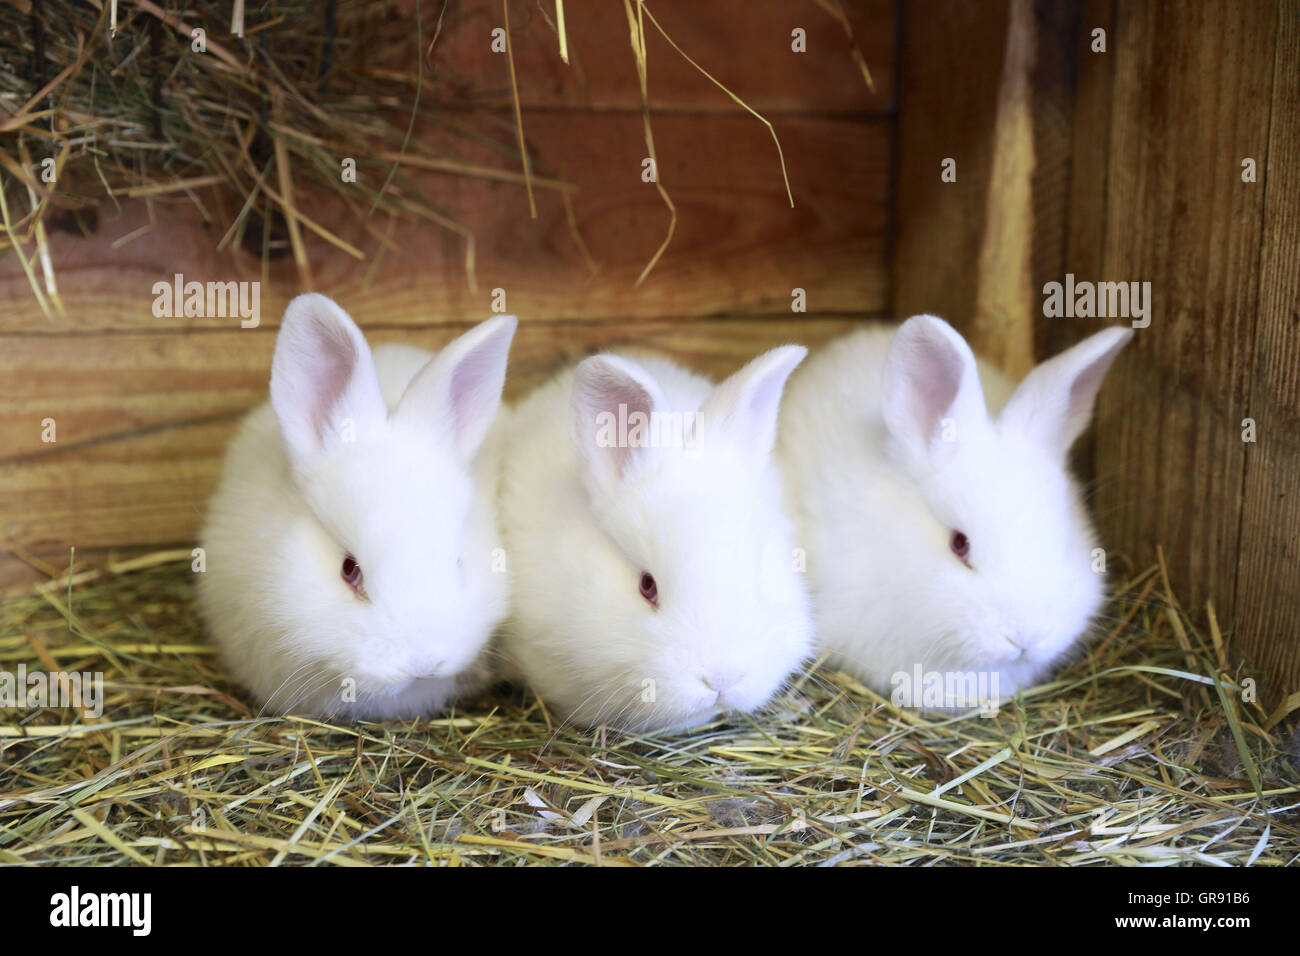 Three Little White Rabbit In A Hutch Stock Photo